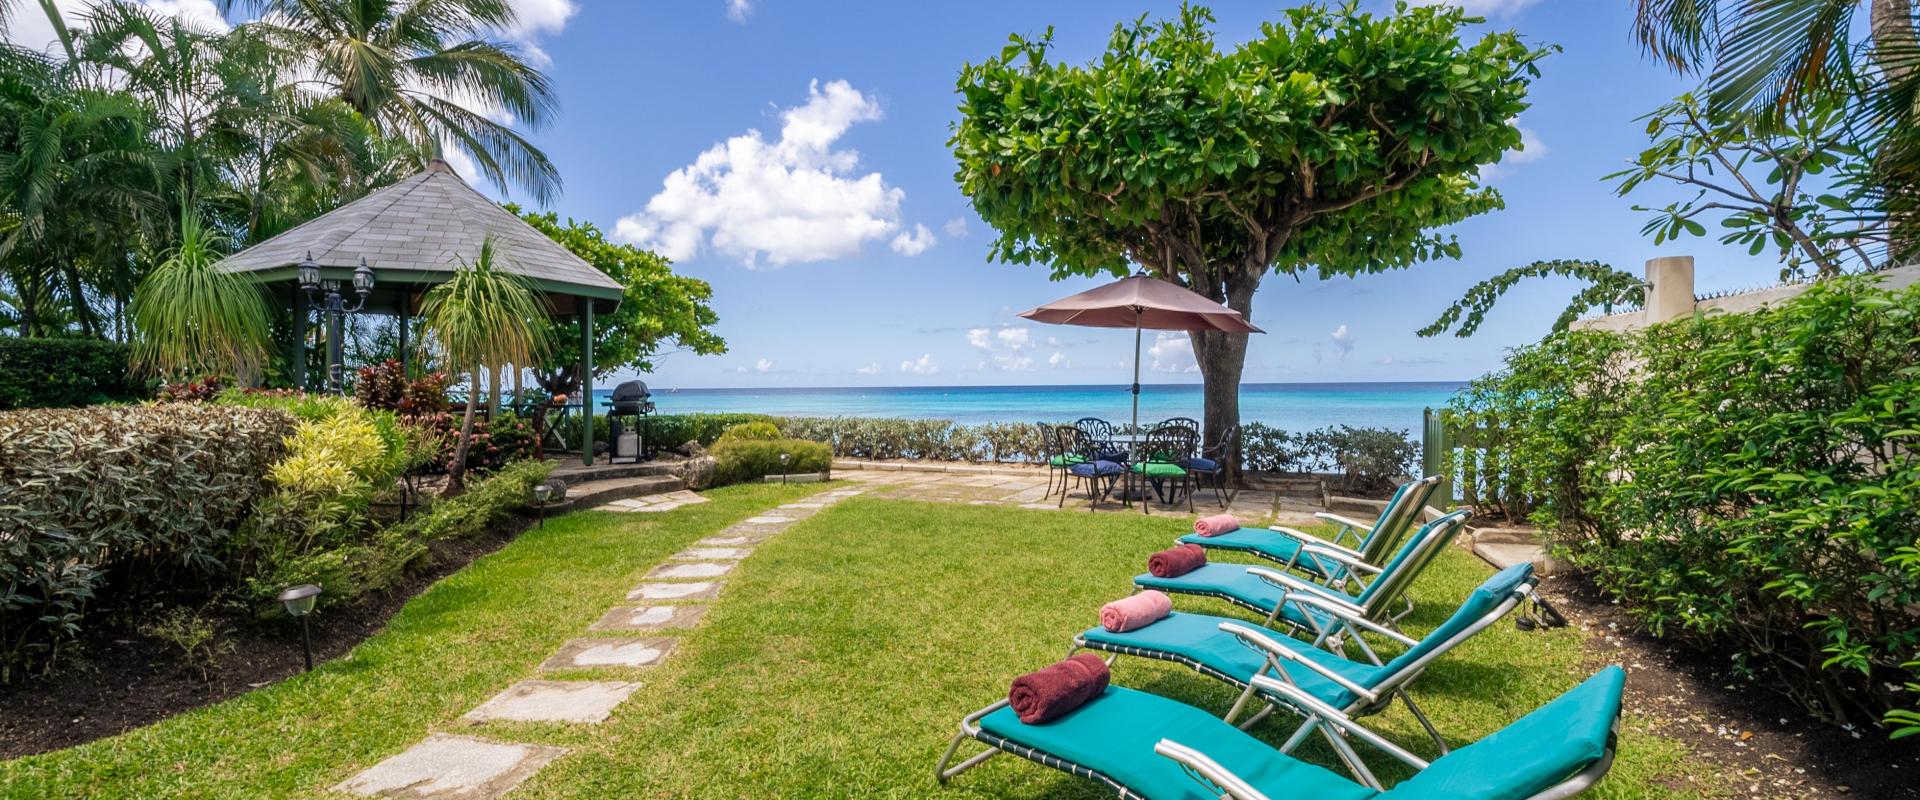 Barbados Beachfront Vacation Rental Villa Seawards Garden with Sun Loungers